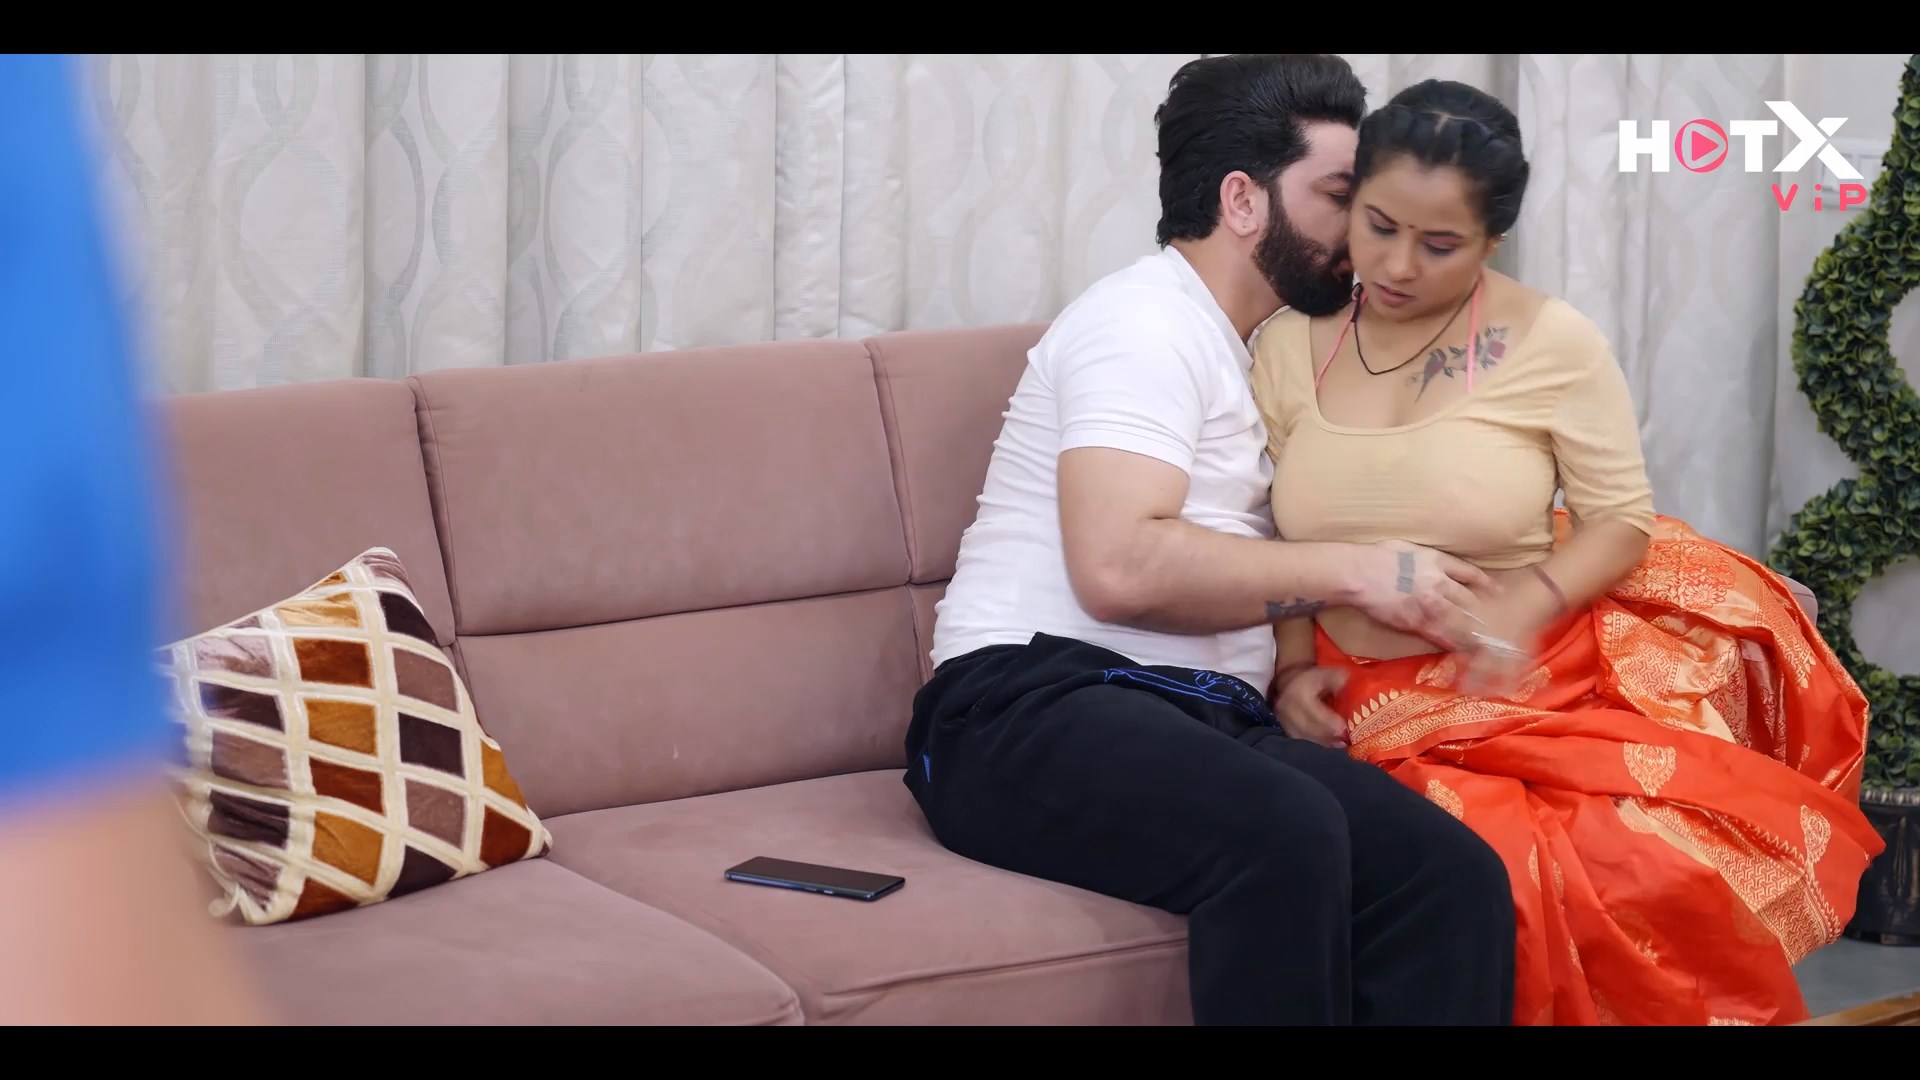 Vip Mom And Son Video - HotX vip hindi uncut porn video - Wowuncut